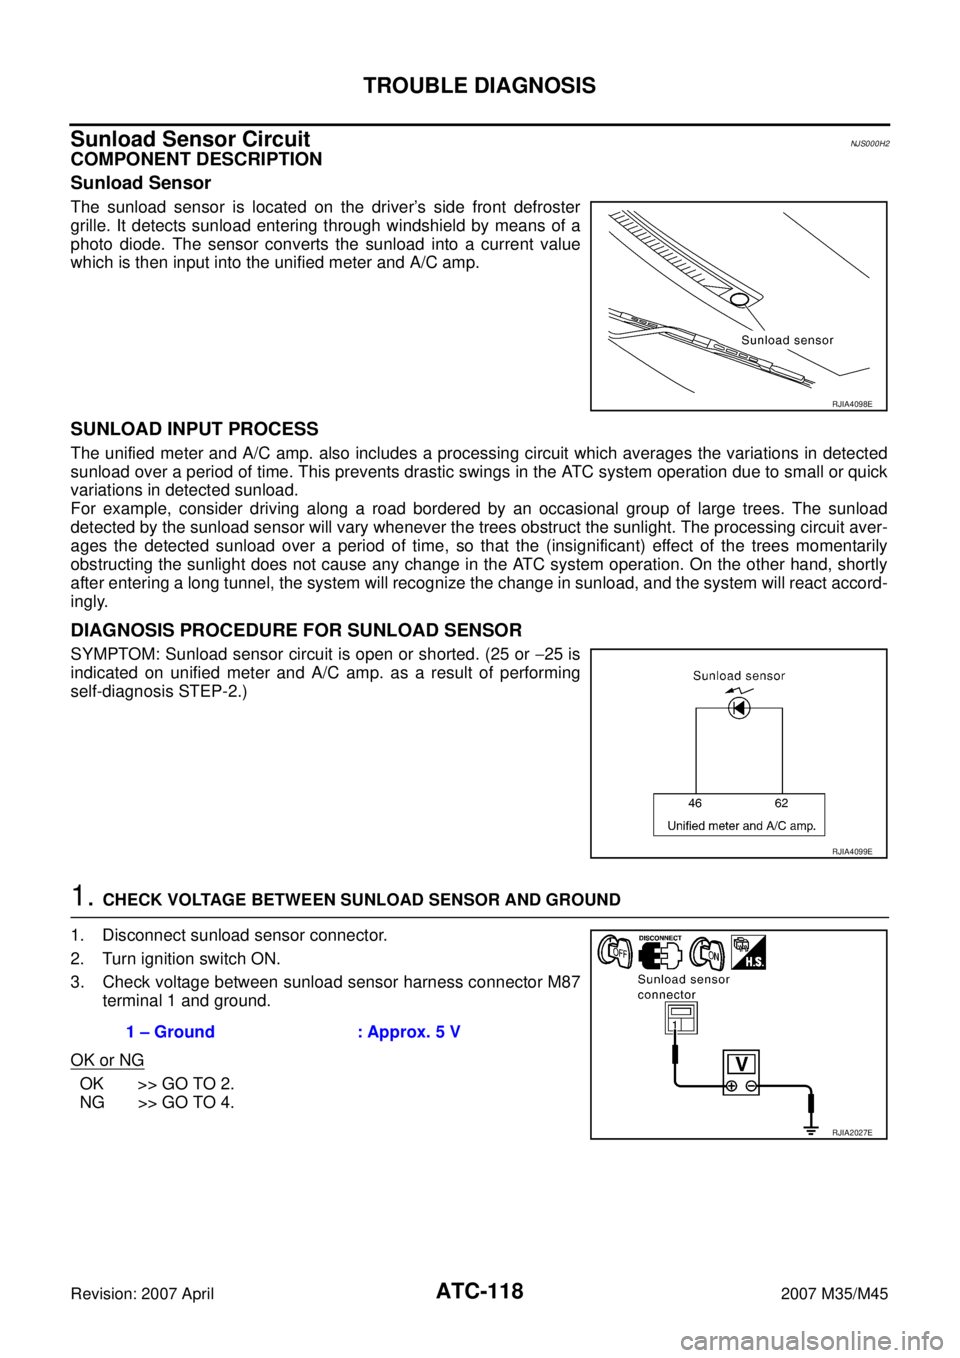 INFINITI M35 2007  Factory Service Manual ATC-118
TROUBLE DIAGNOSIS
Revision: 2007 April2007 M35/M45
Sunload Sensor CircuitNJS000H2
COMPONENT DESCRIPTION
Sunload Sensor
The sunload sensor is located on the driver’s side front defroster
gril